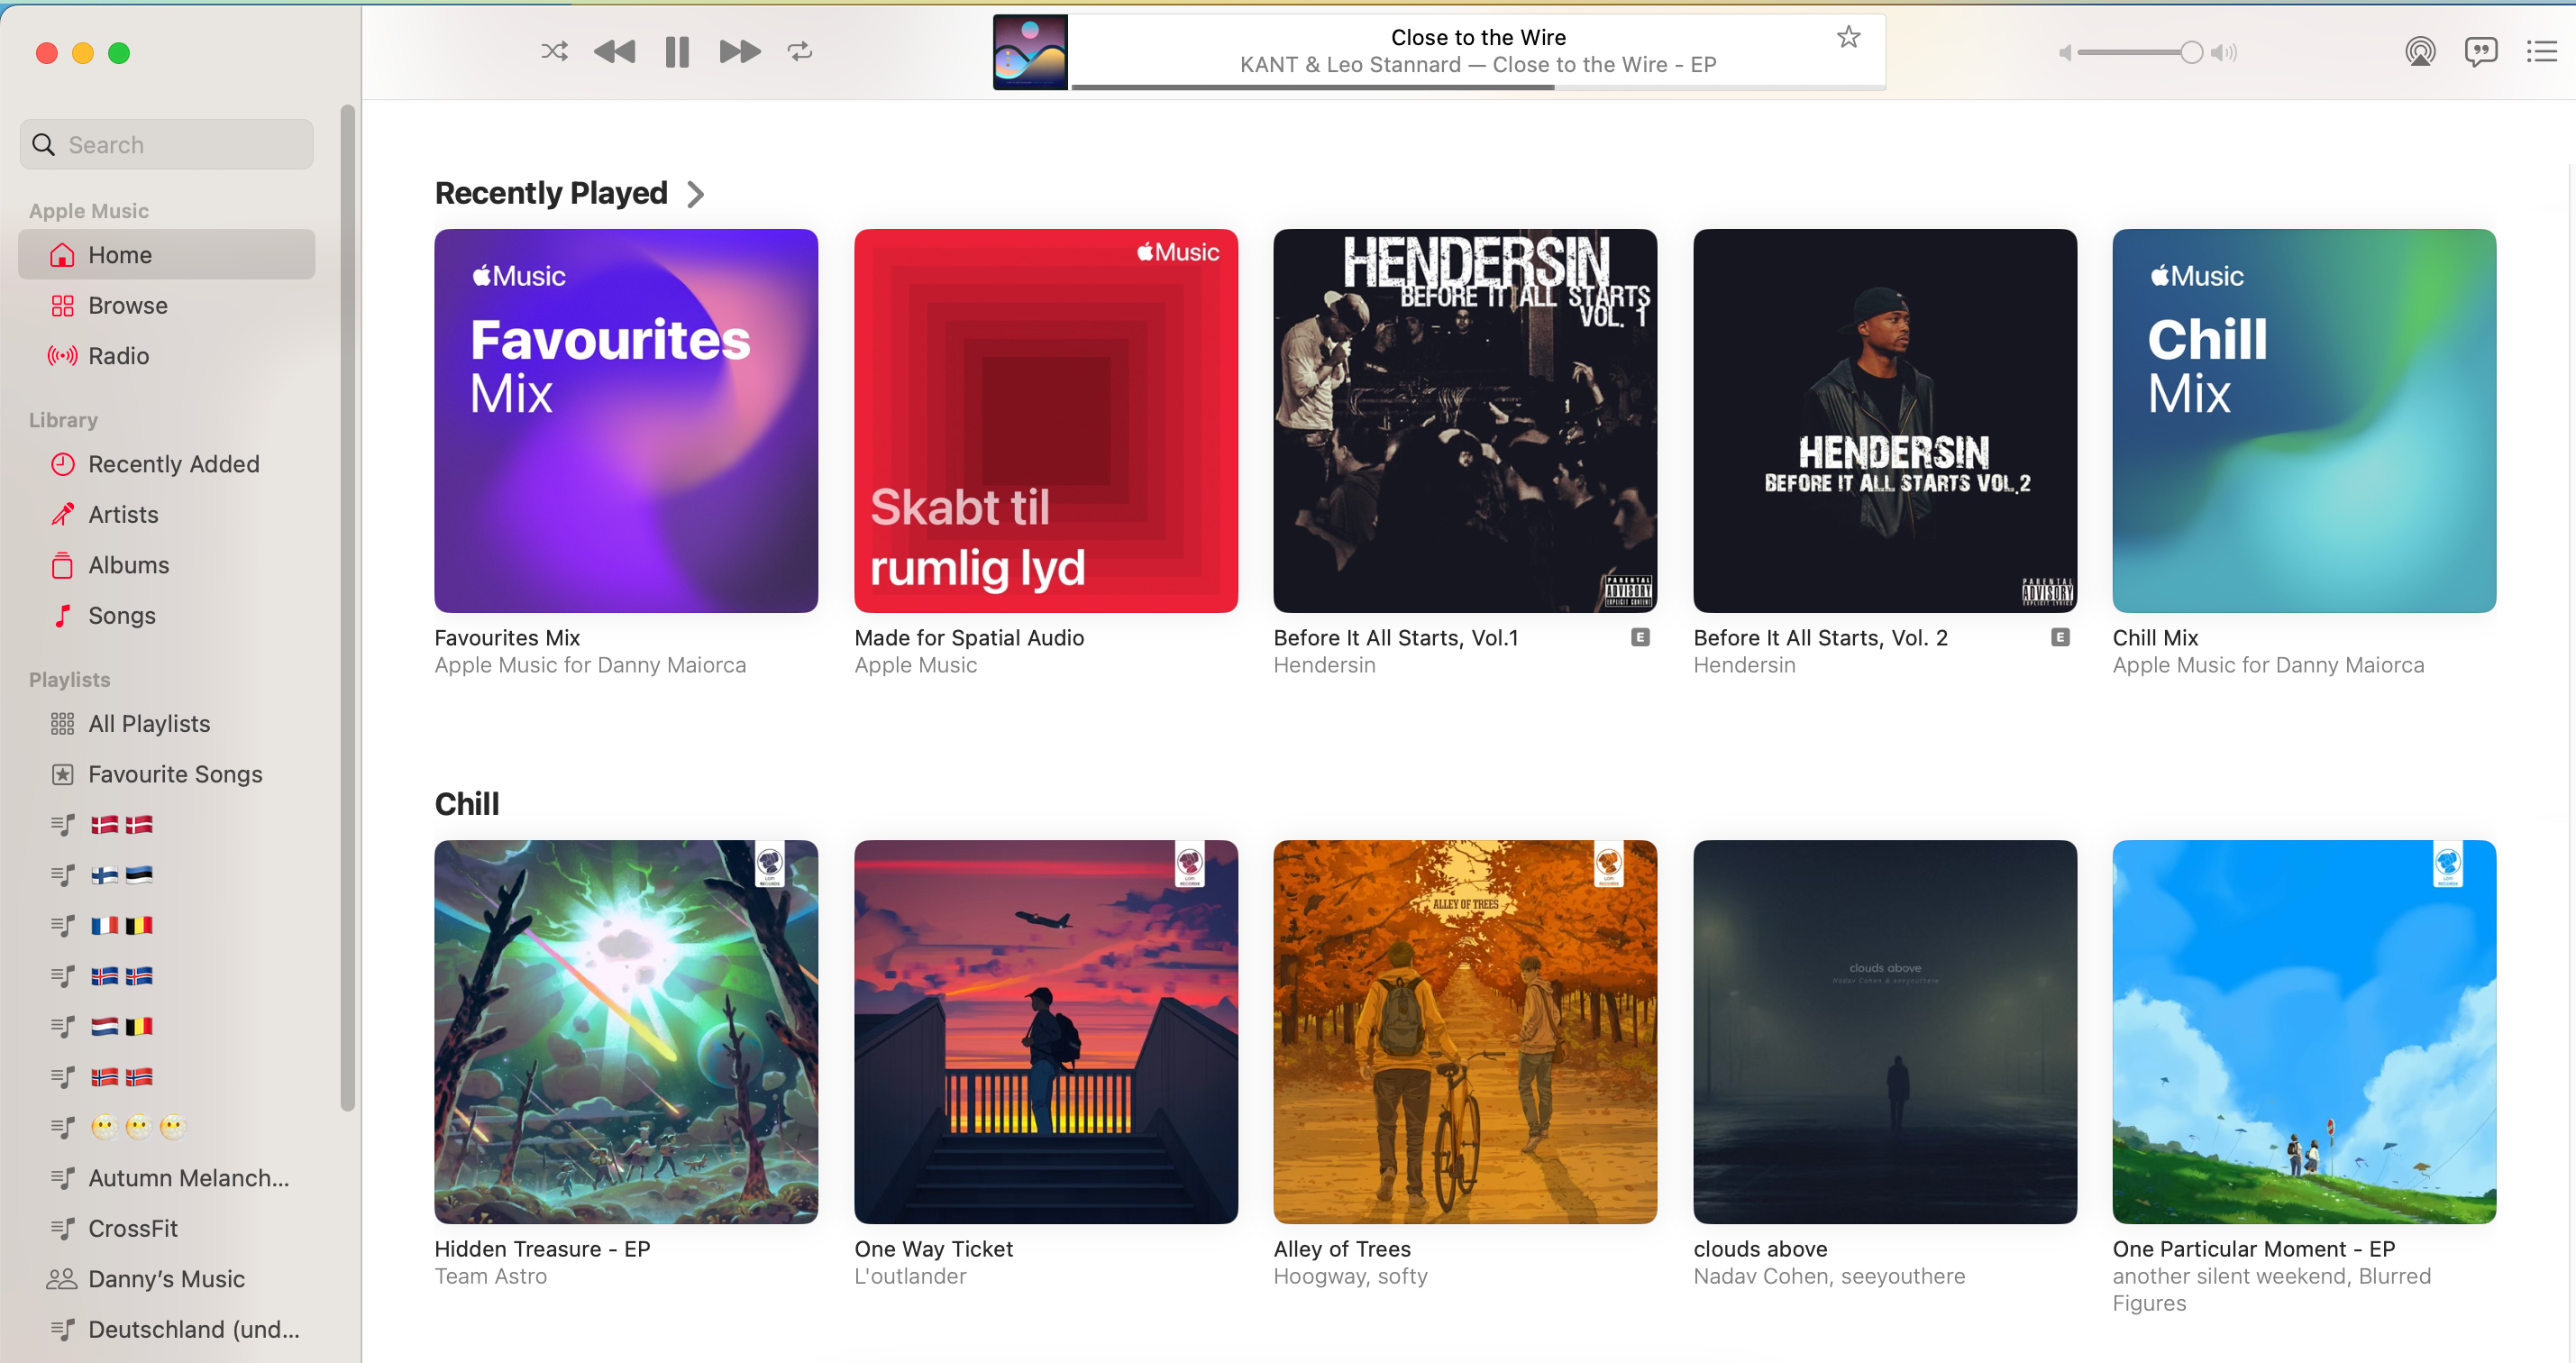 The Apple Music app interface